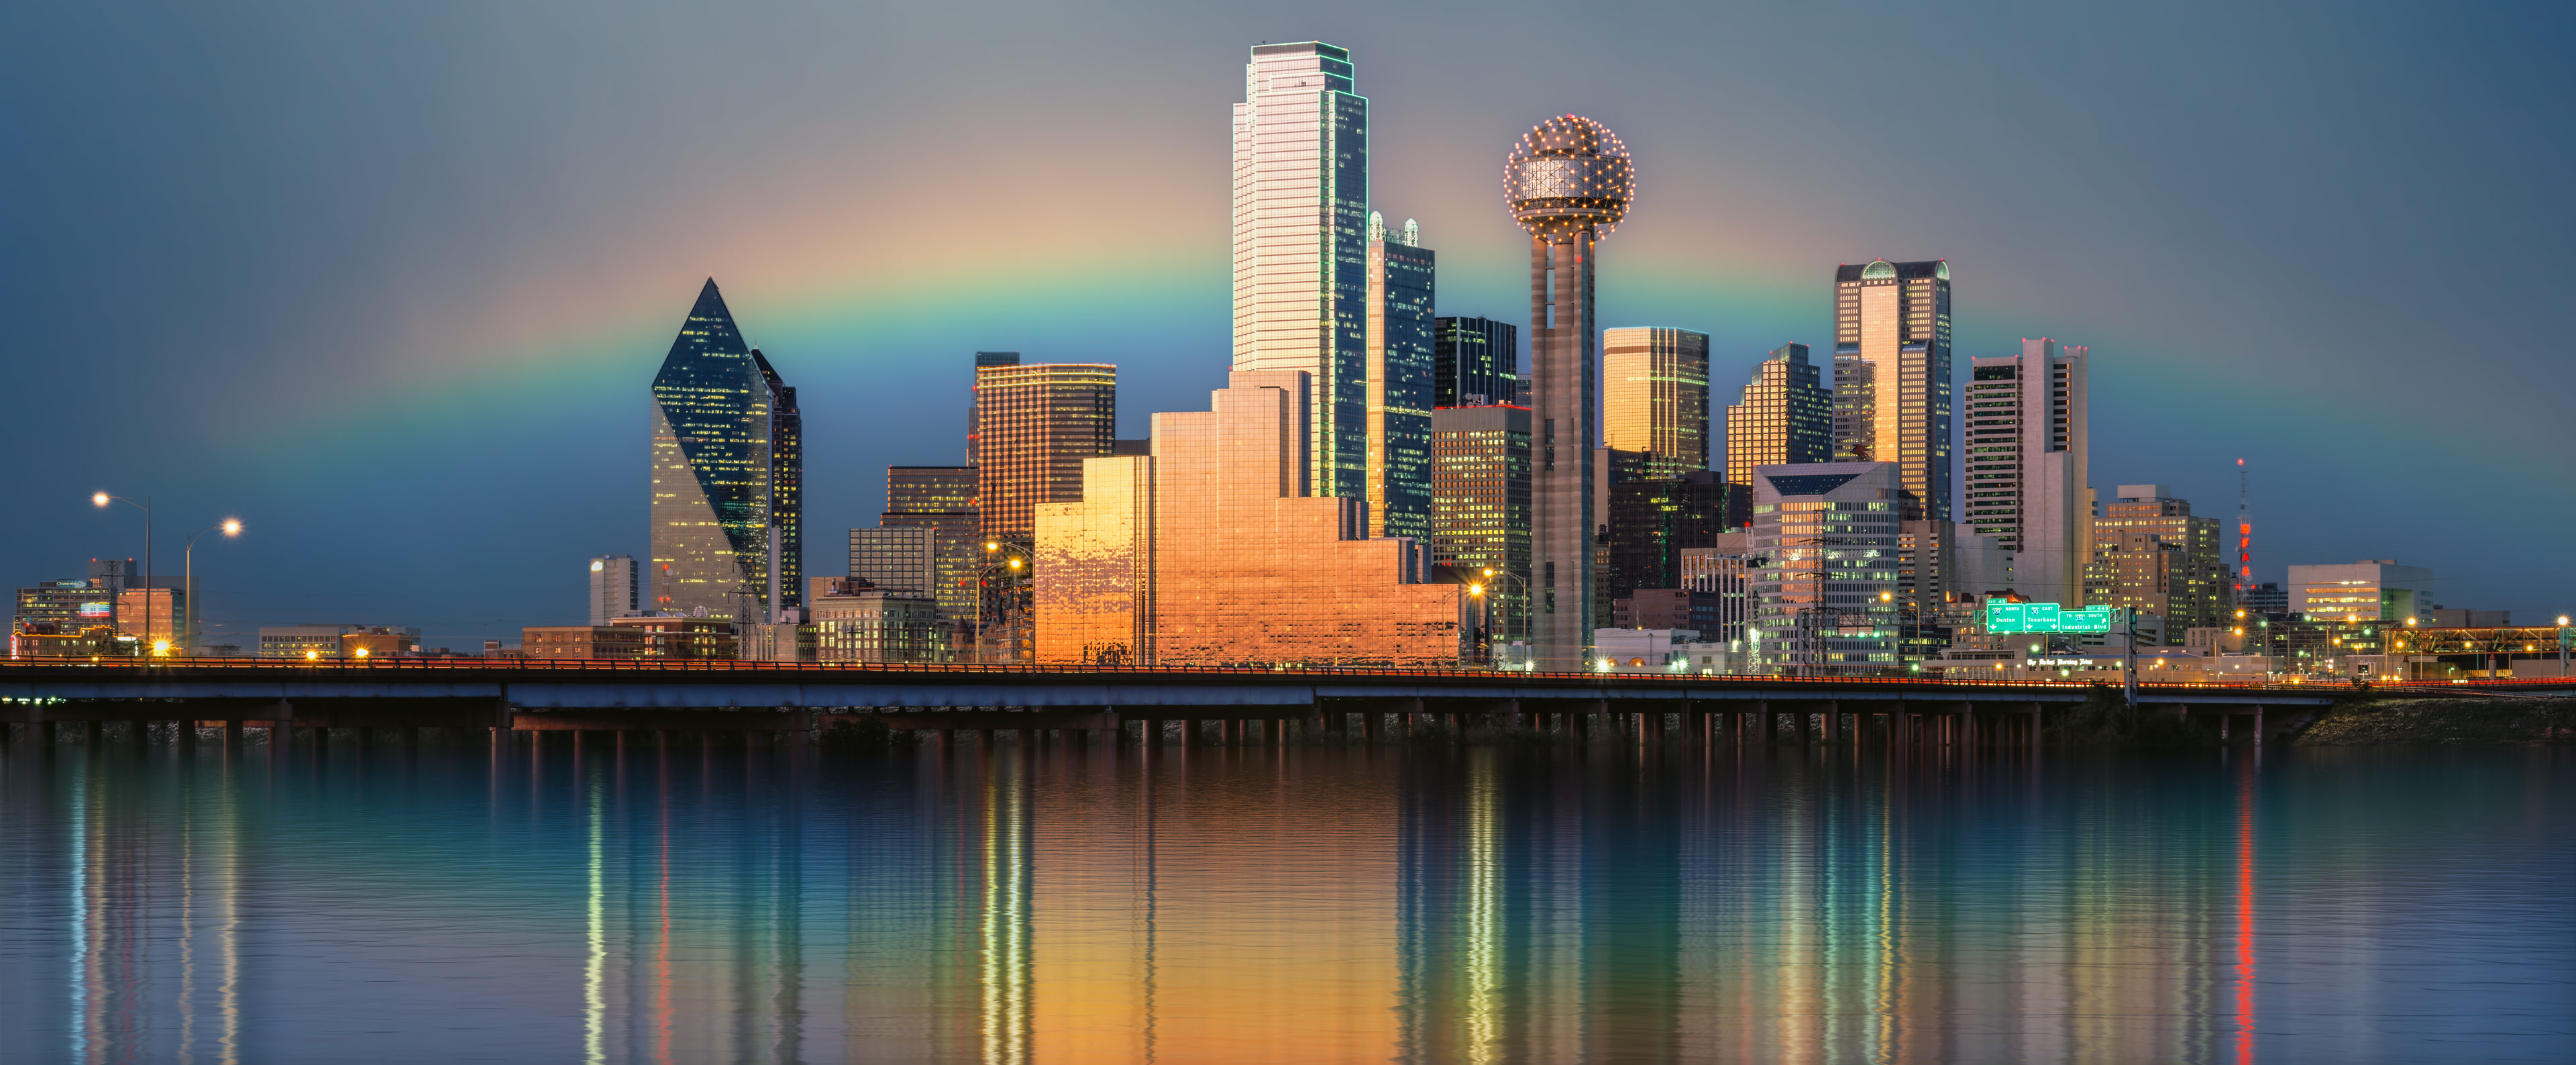 Rainbow and Reflection, Trinity River, Dallas Texas, USA